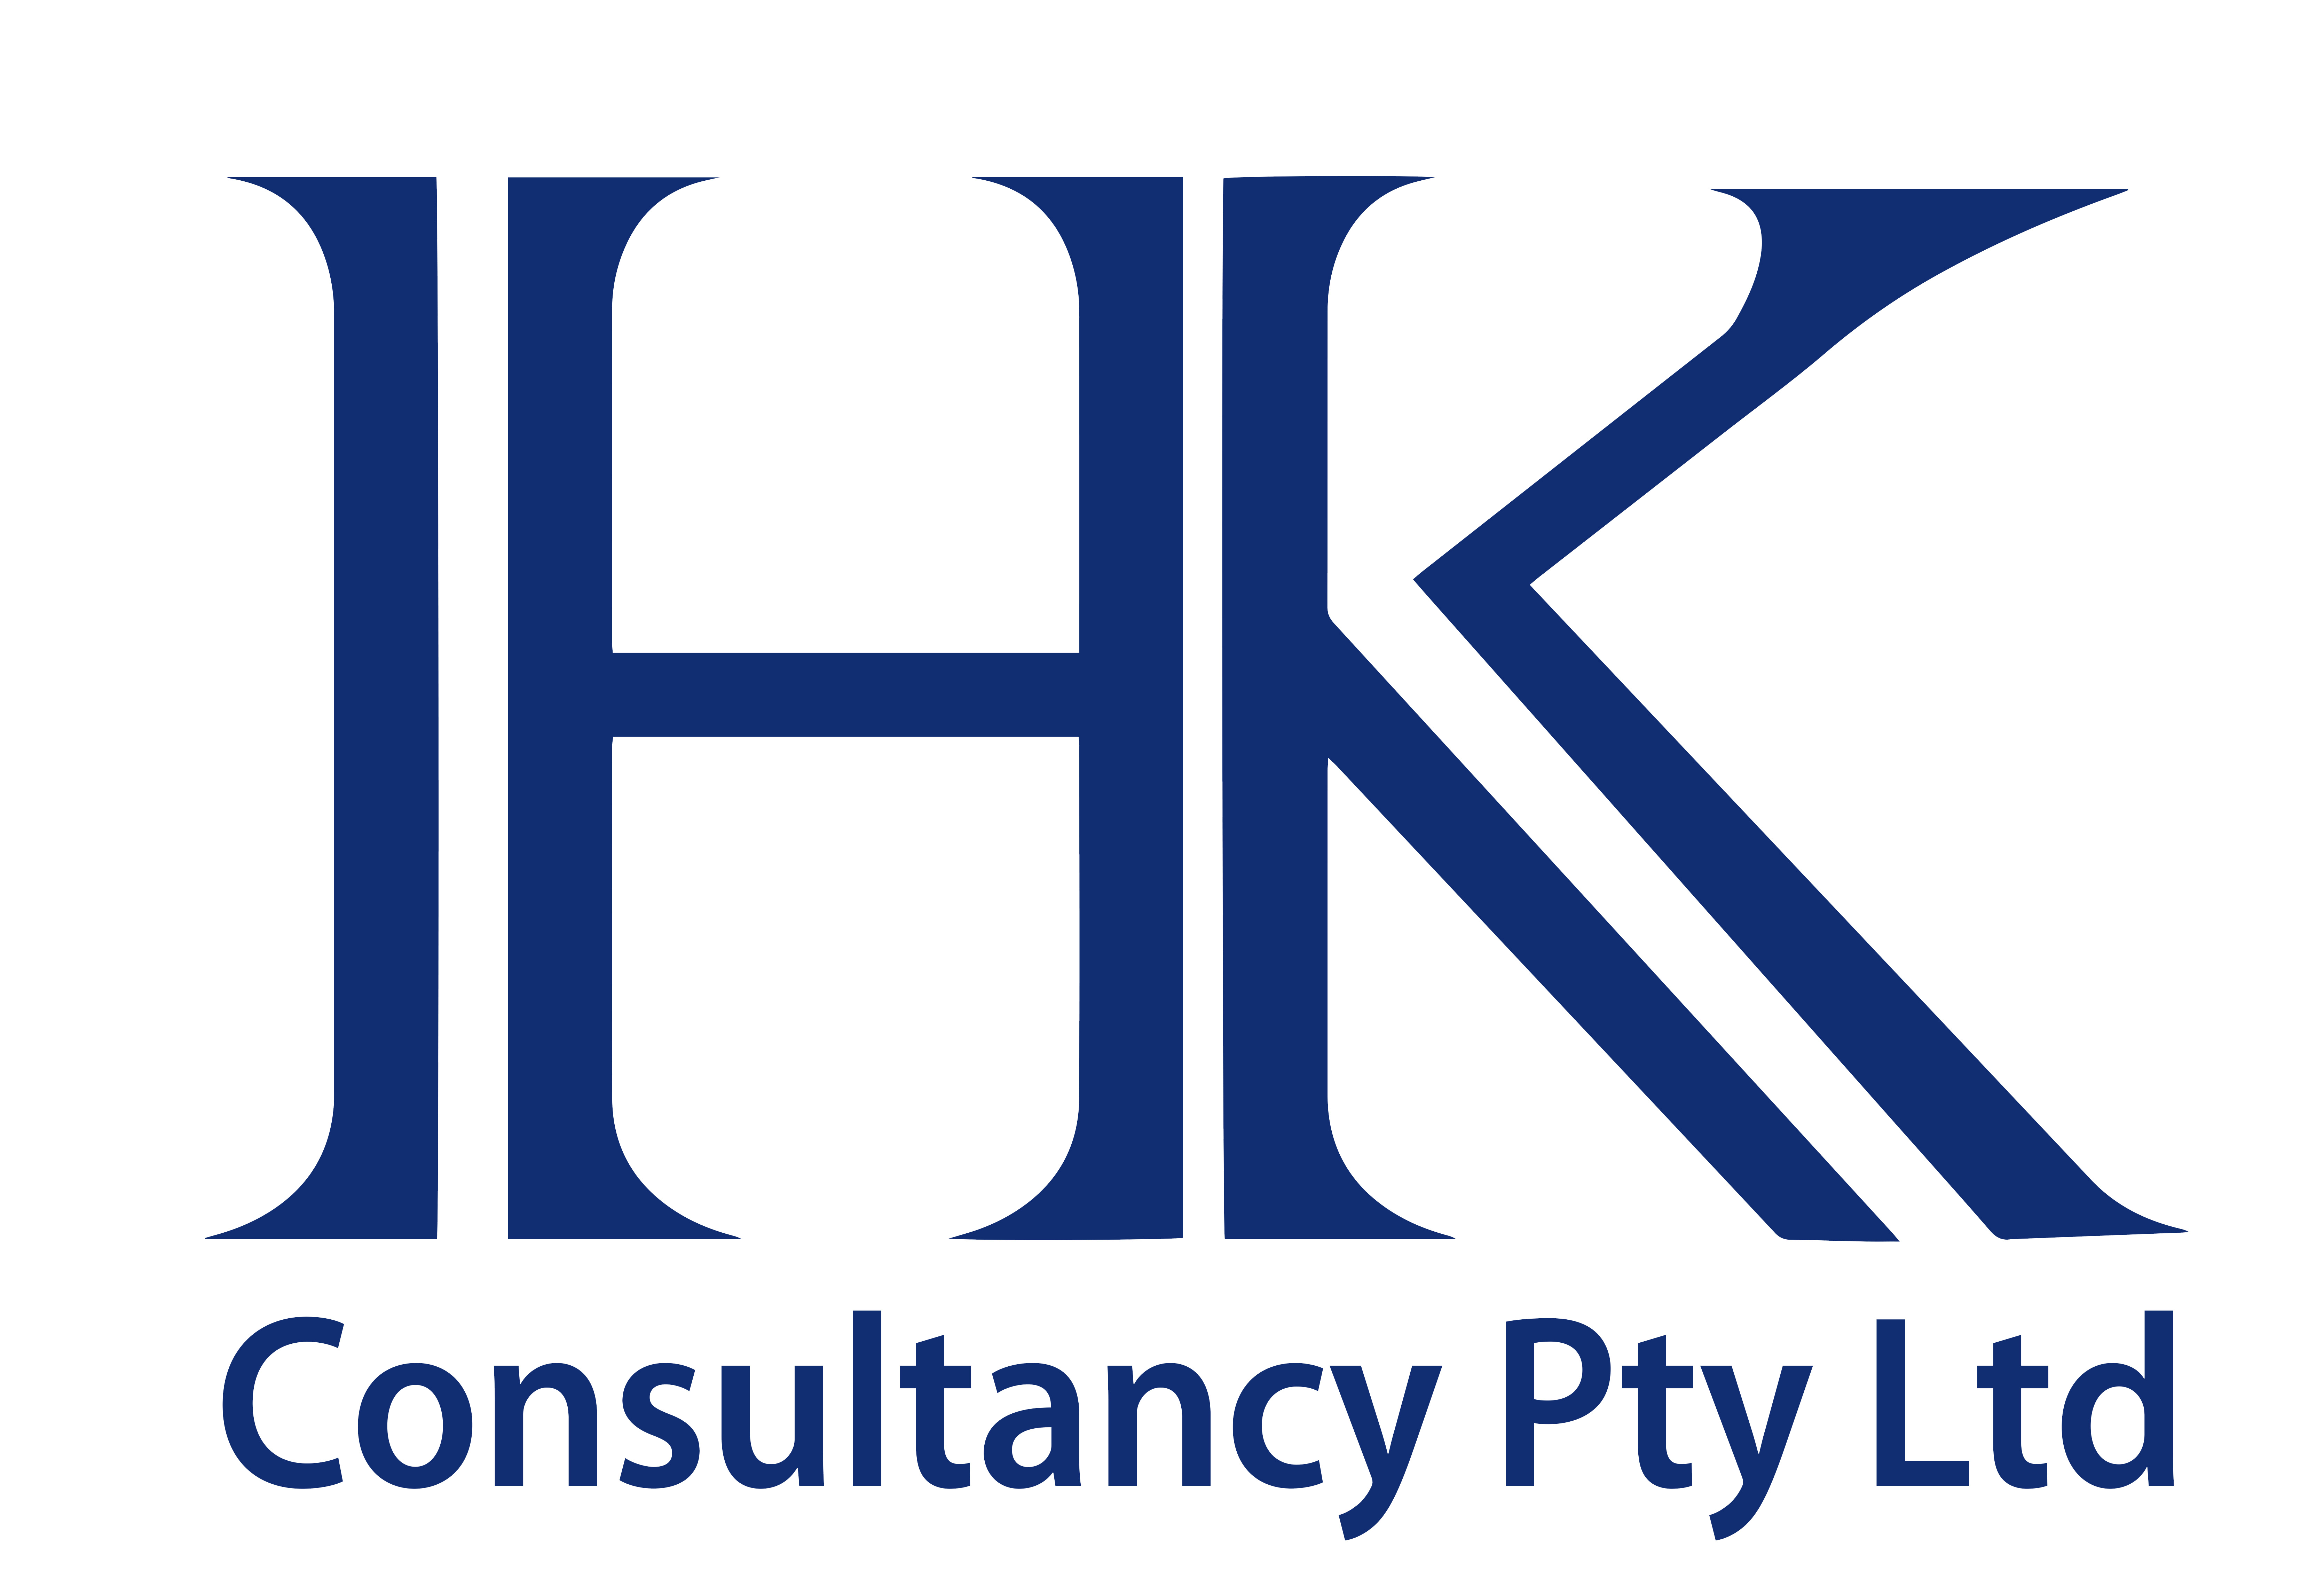 HK Consultancy